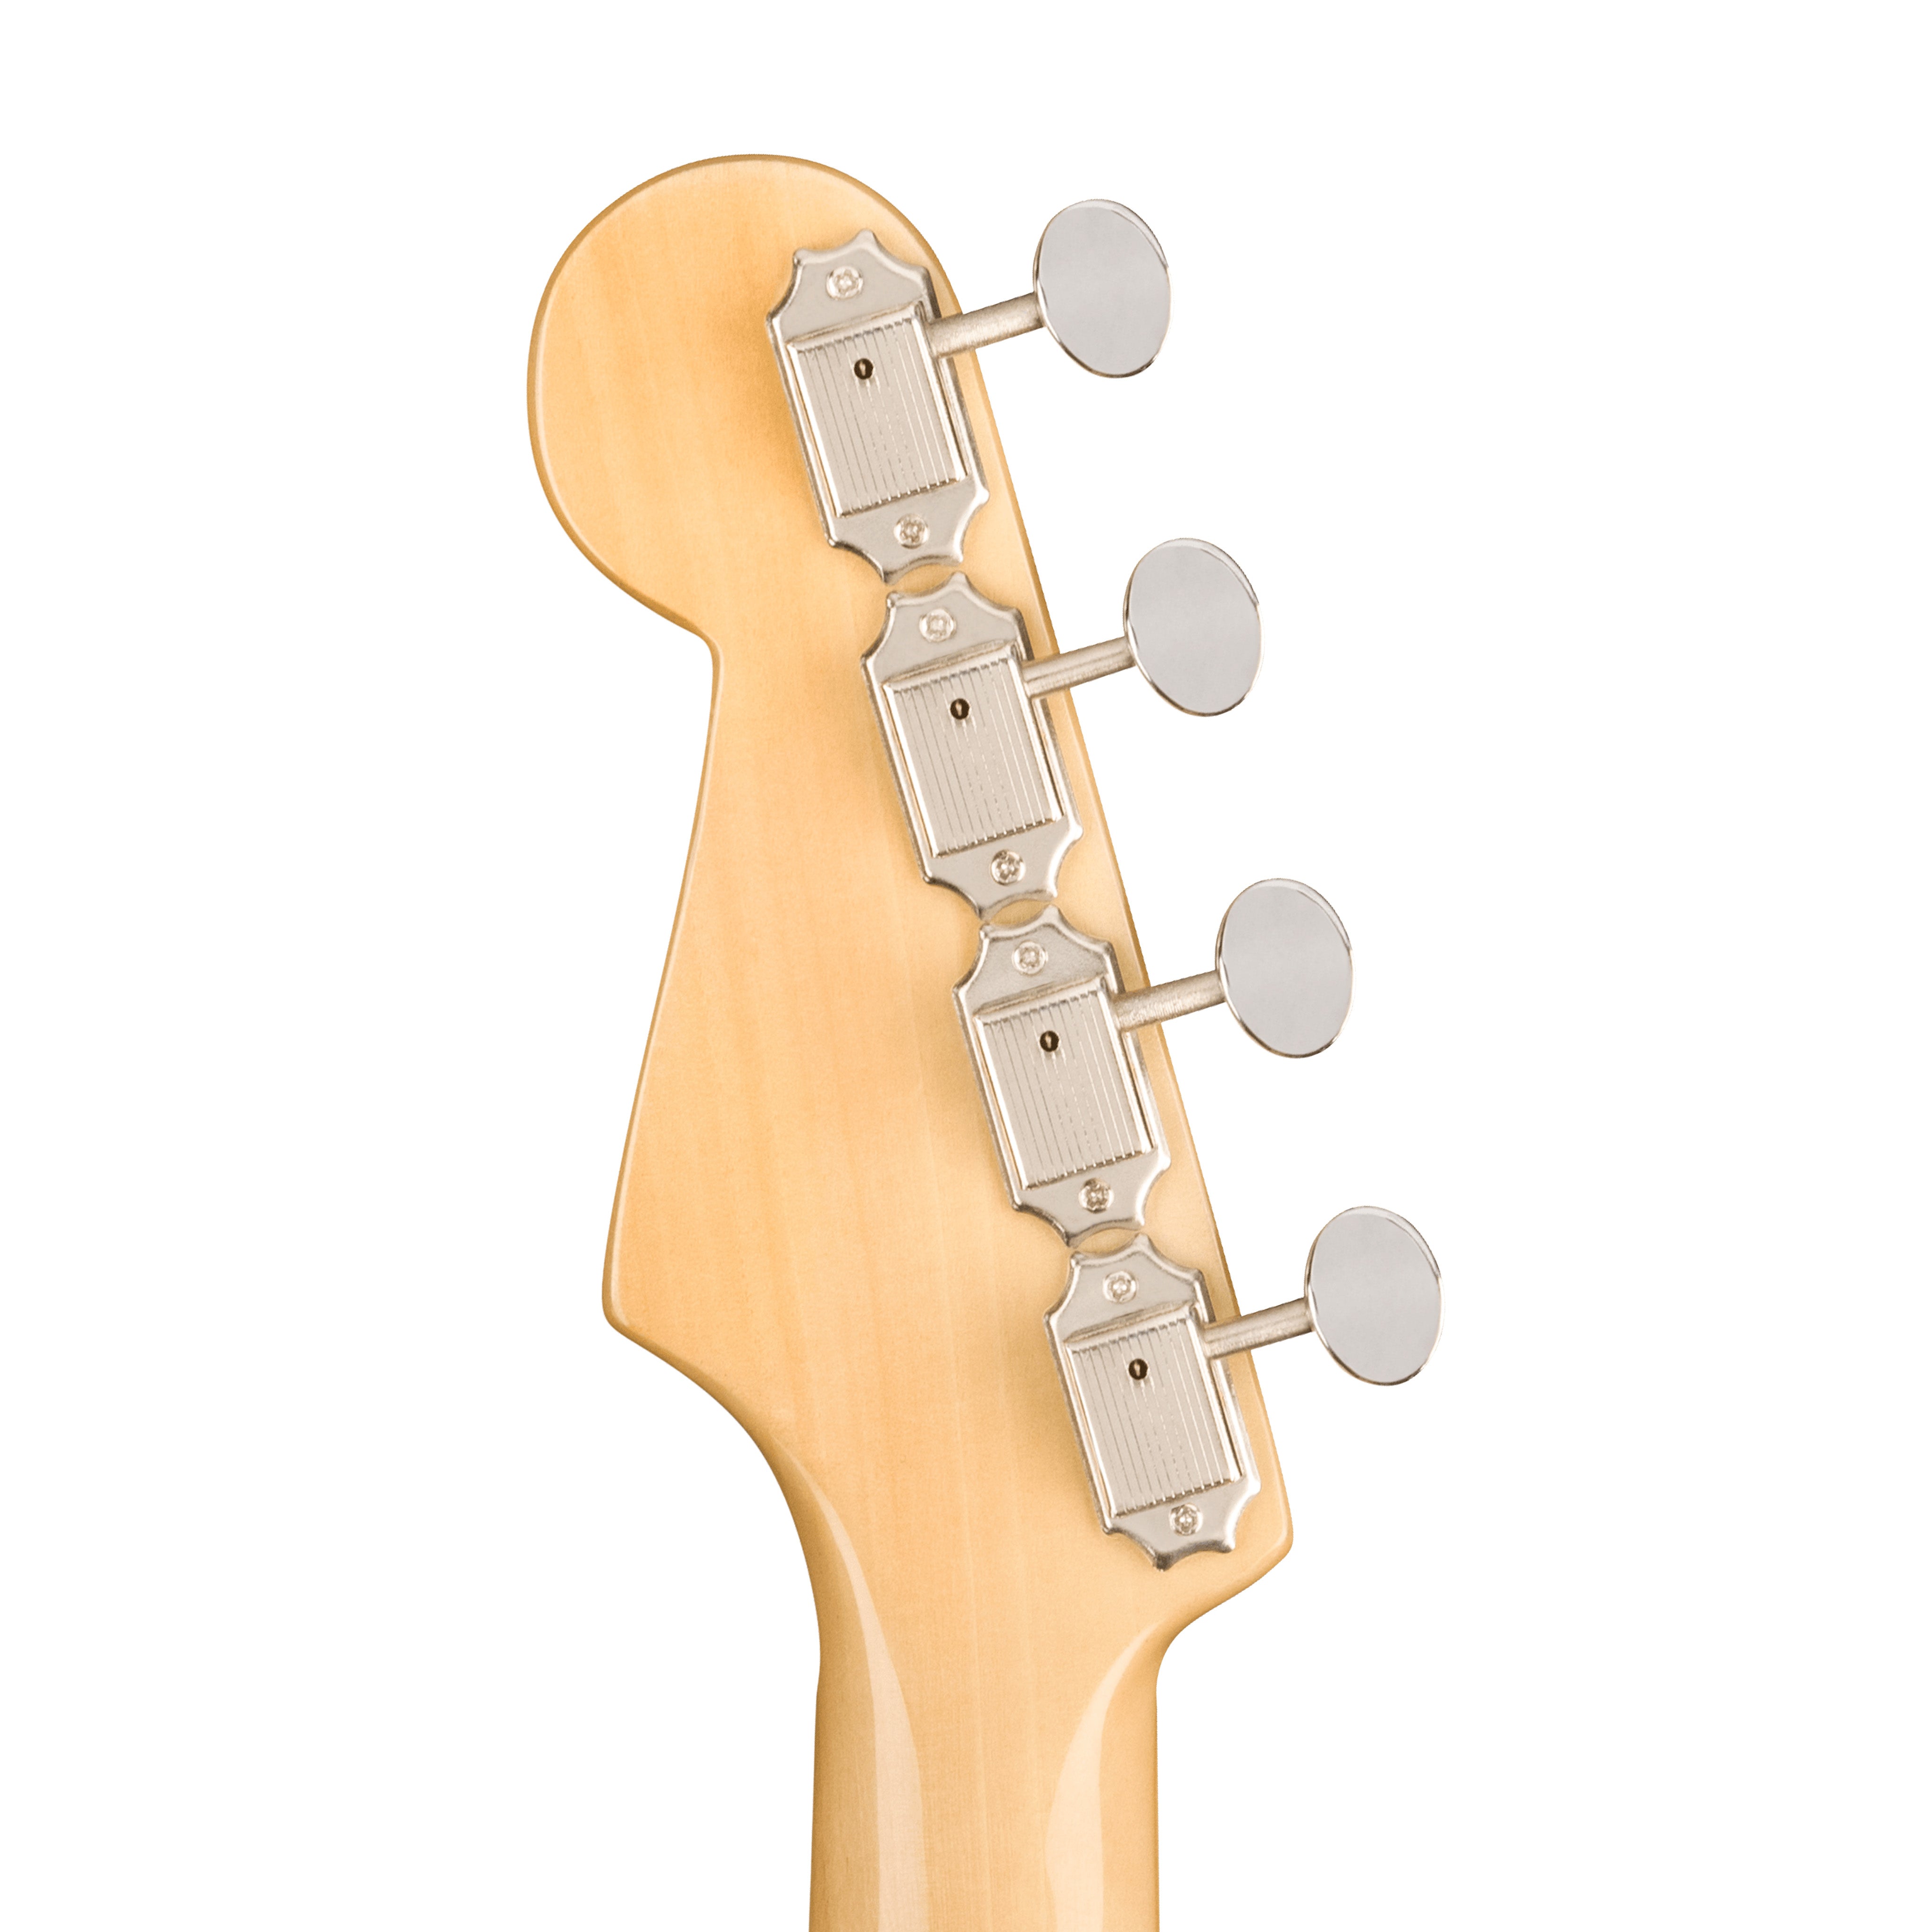 Fender Fullerton Stratocaster Ukulele, Candy Apple Red